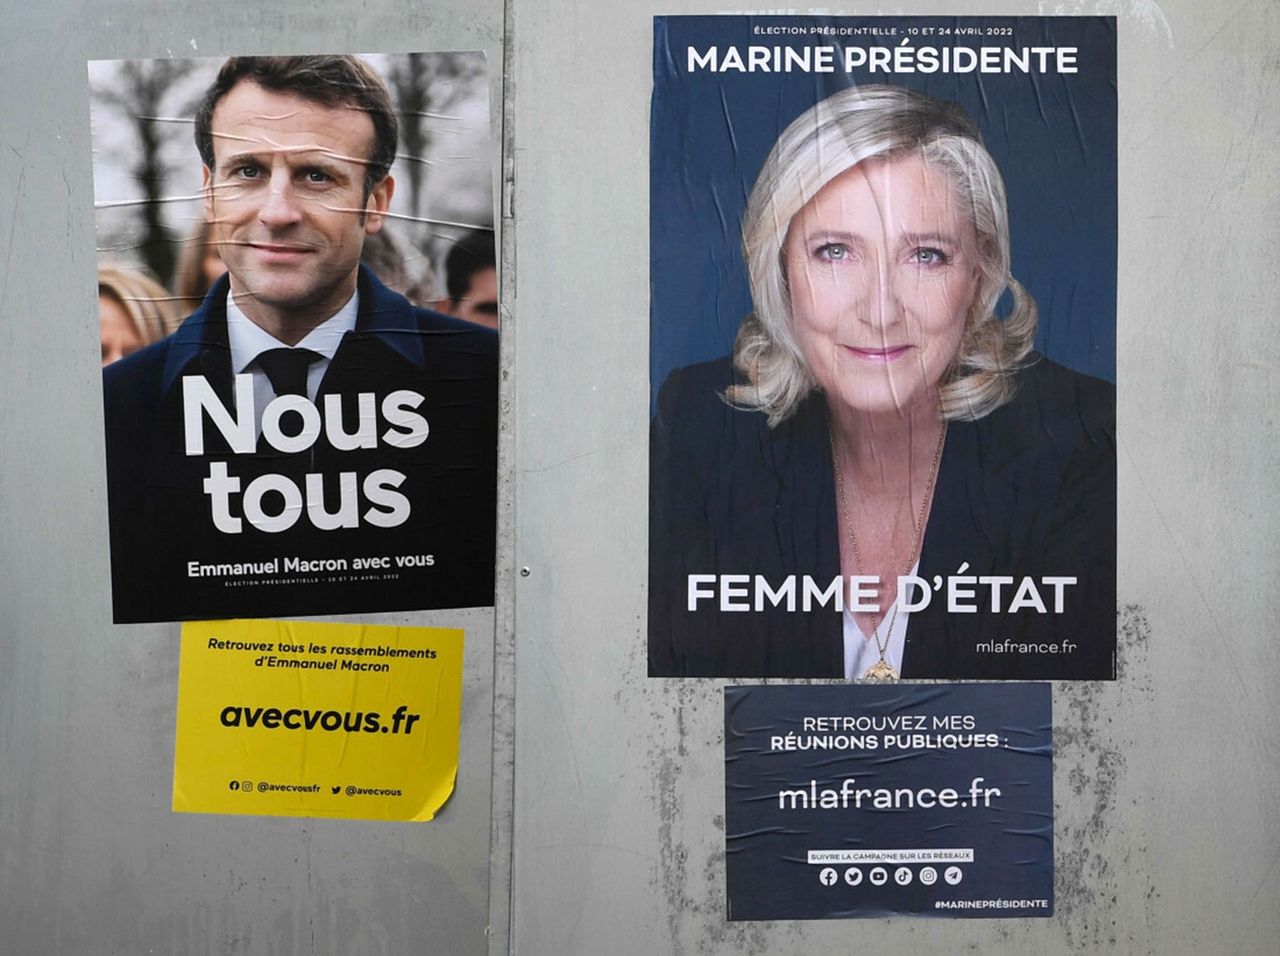 Macron czy Le Pen? Nowy sondaż z Francji